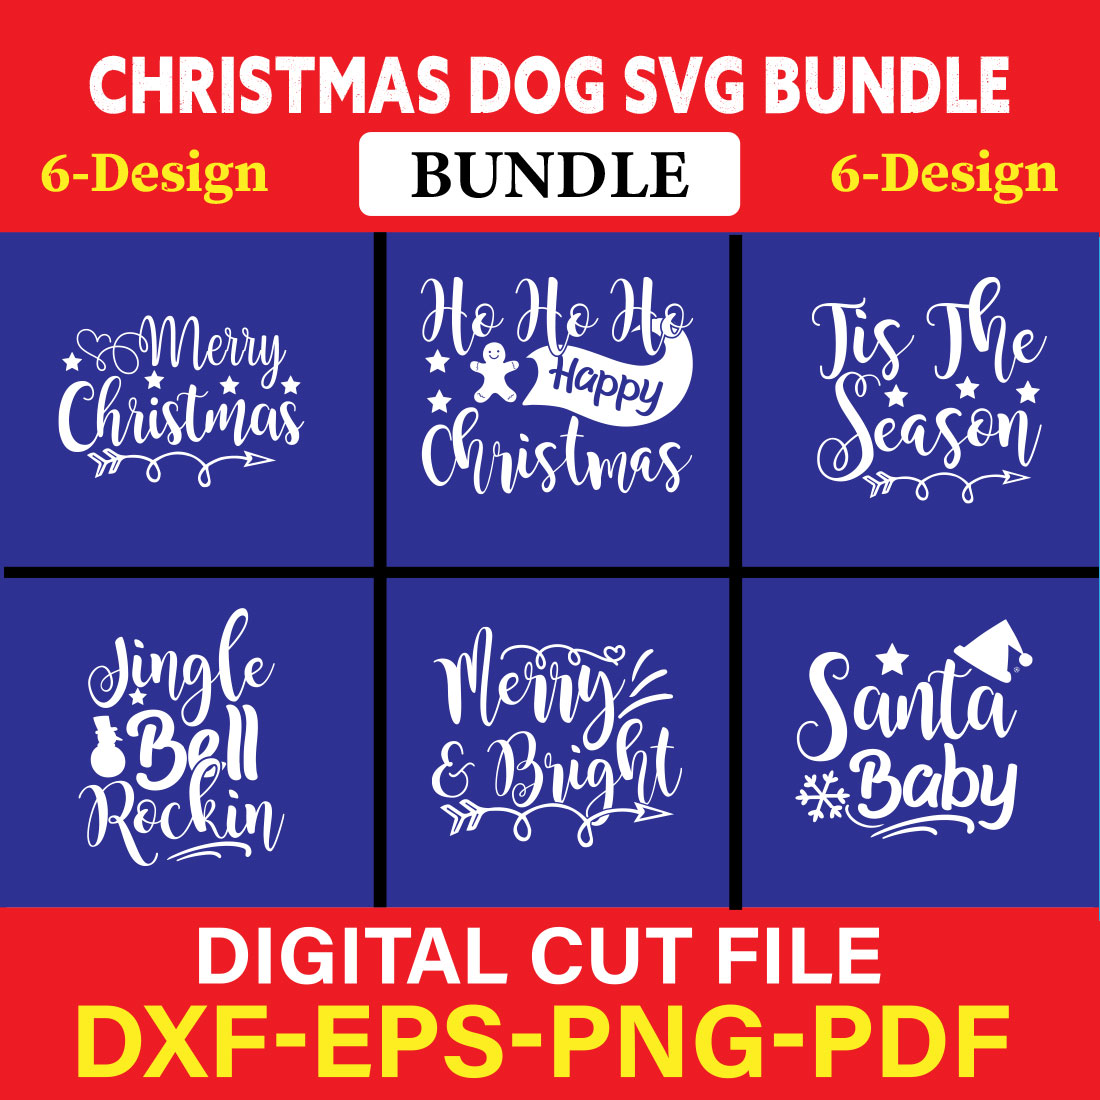 Christmas SVG Bundle / Funny Christmas SVG / Cut File vol-08 cover image.